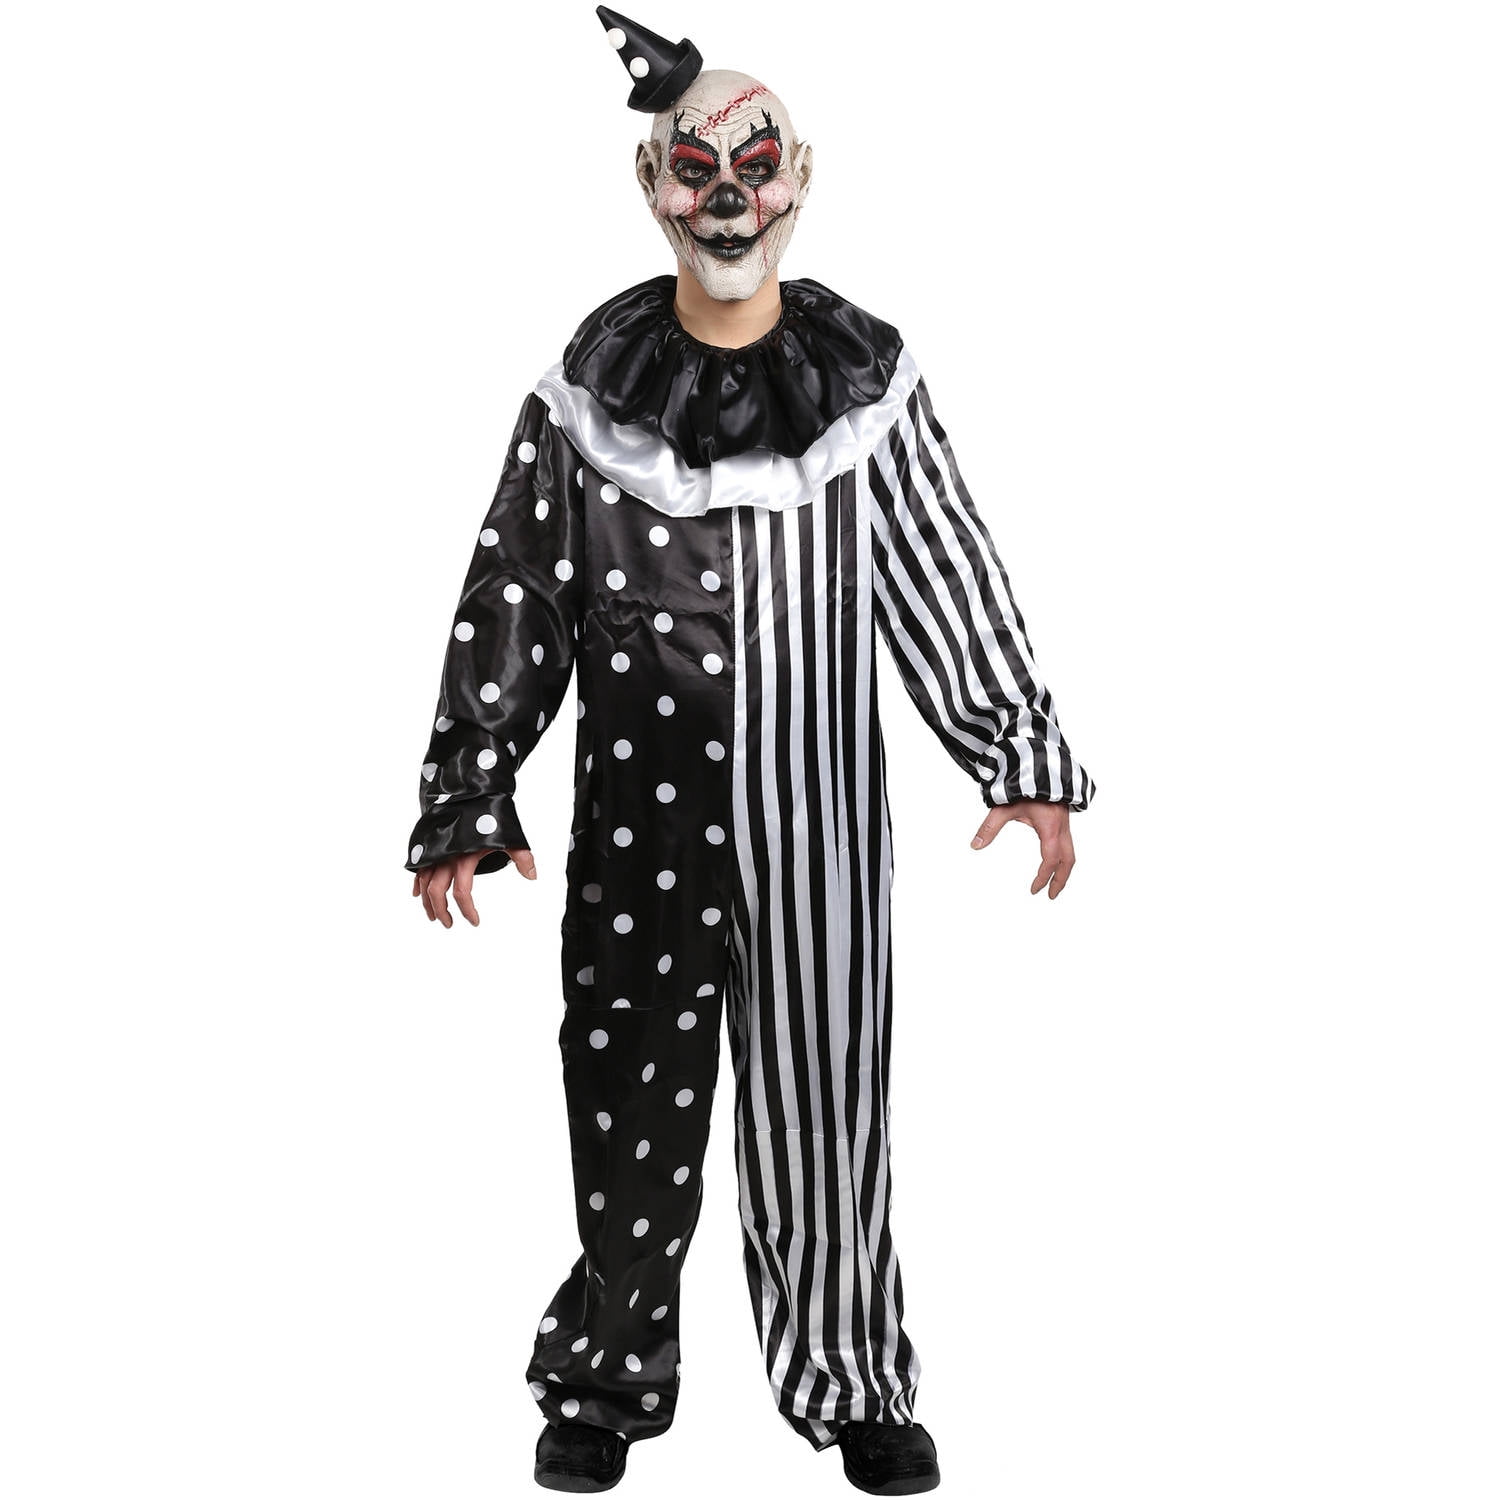 Killjoy Clown Costume Child Halloween Costume - Walmart.com